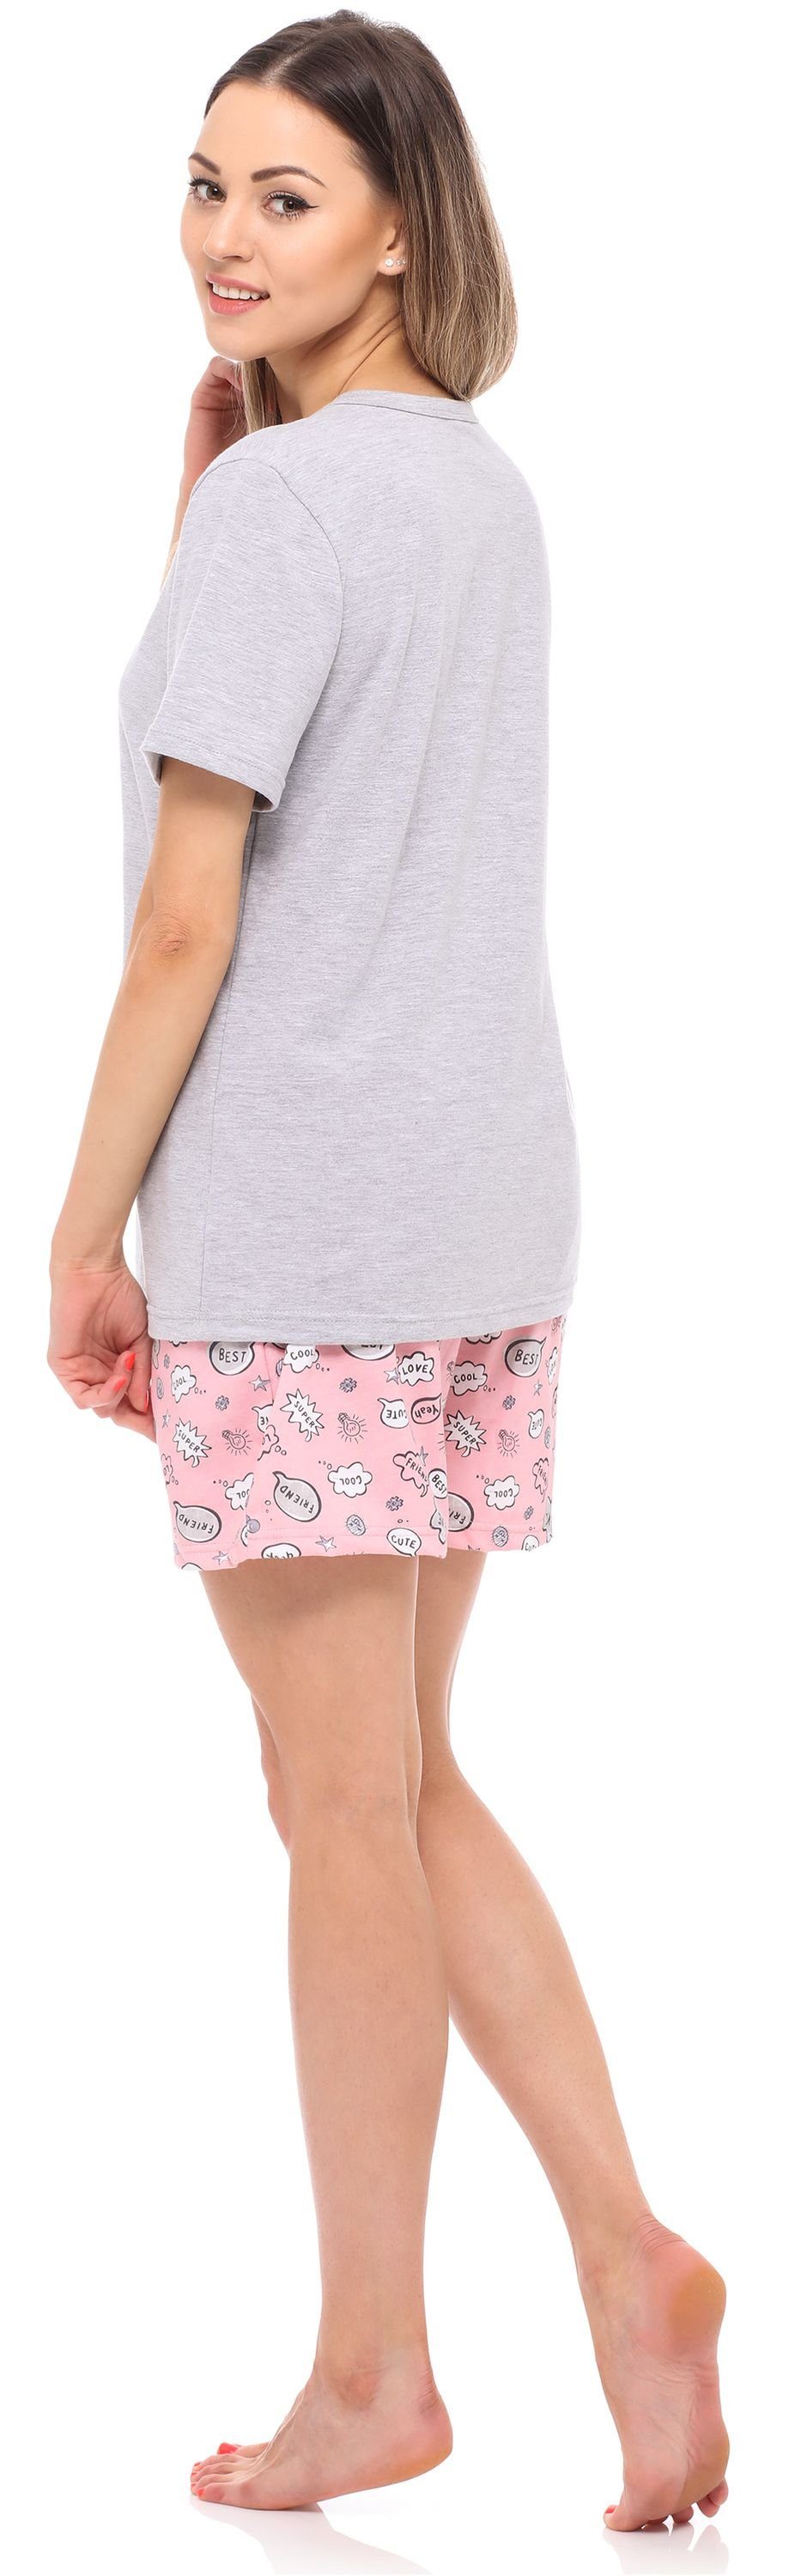 Set Style Damen Kurz Schlafanzug Schlafanzug Baumwolle Merry Pyjama MS10-177 Zweiteiler Pyjama Melange/Rosa